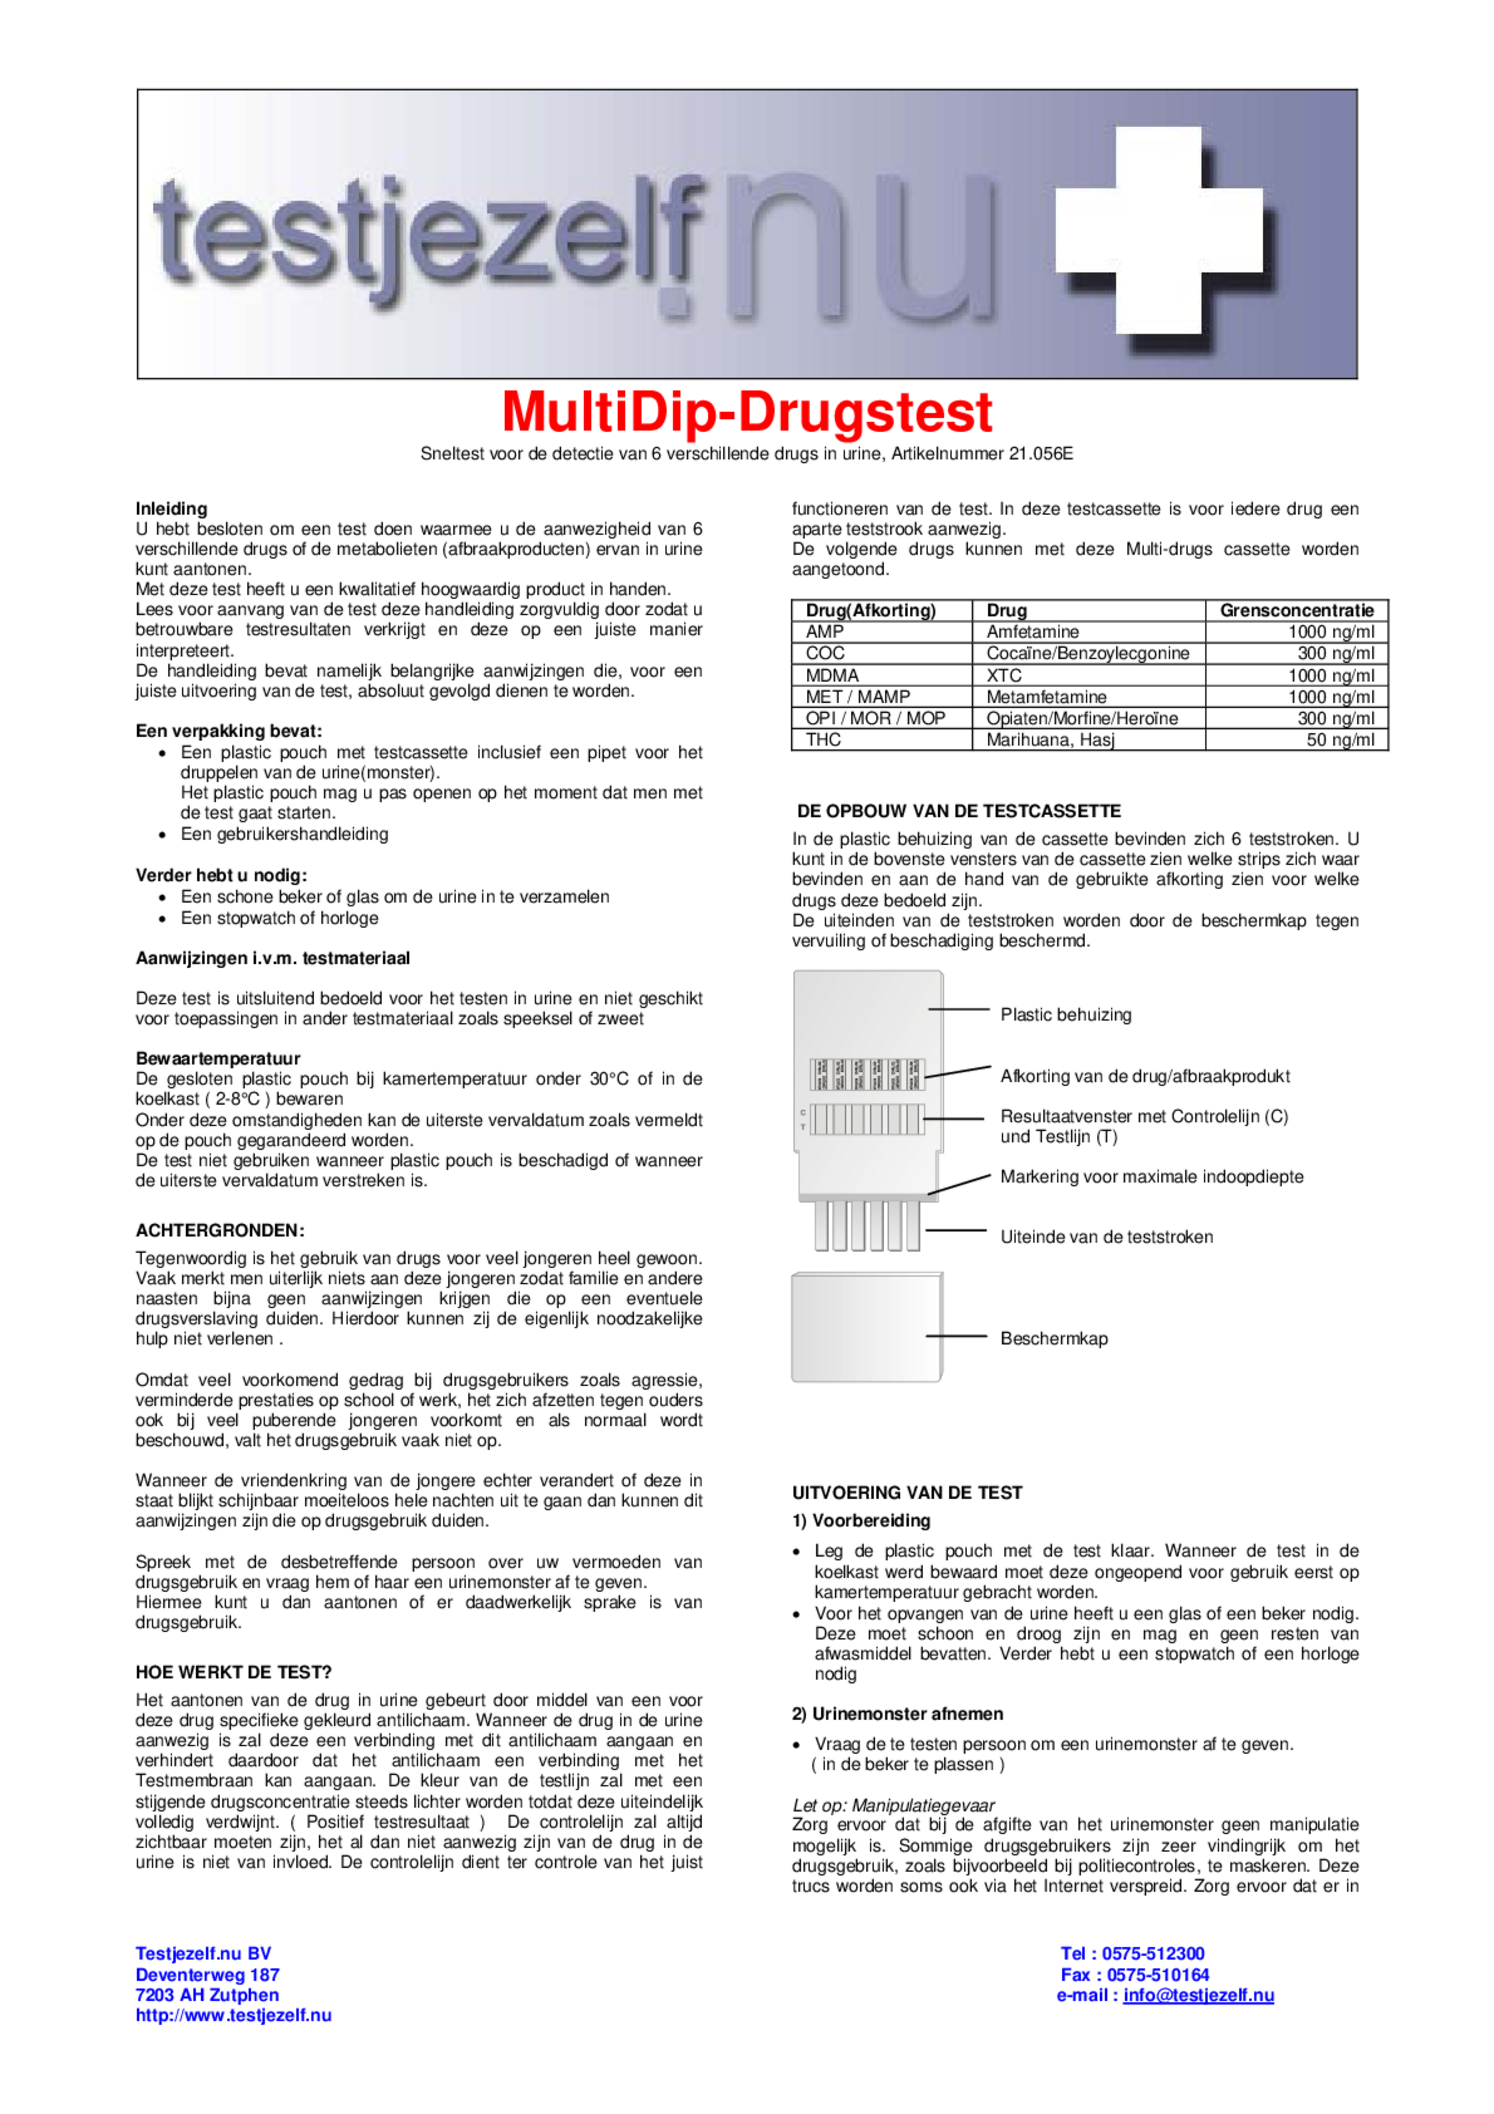 Drugstest Multi afbeelding van document #1, gebruiksaanwijzing